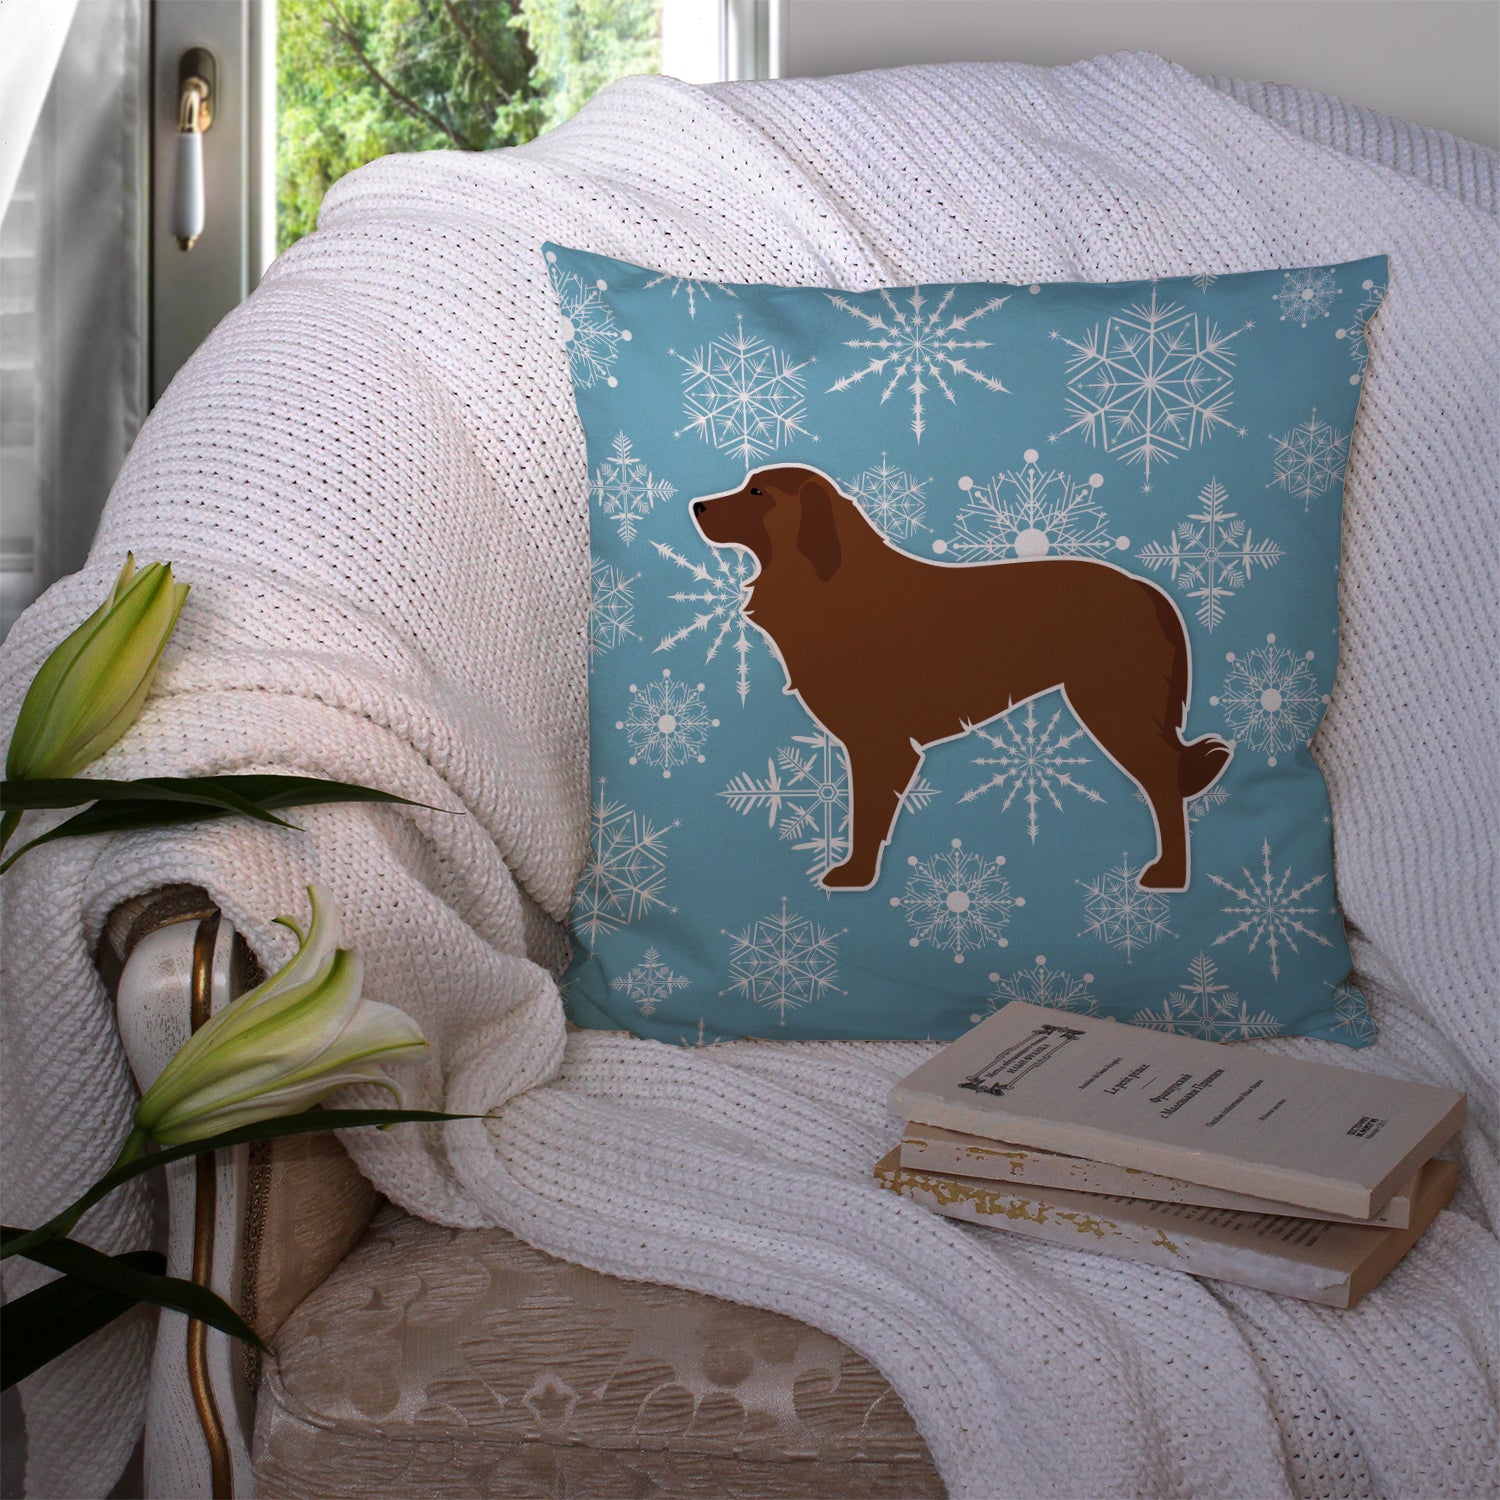 Winter Snowflake Portuguese Sheepdog Dog Fabric Decorative Pillow BB3531PW1414 - the-store.com